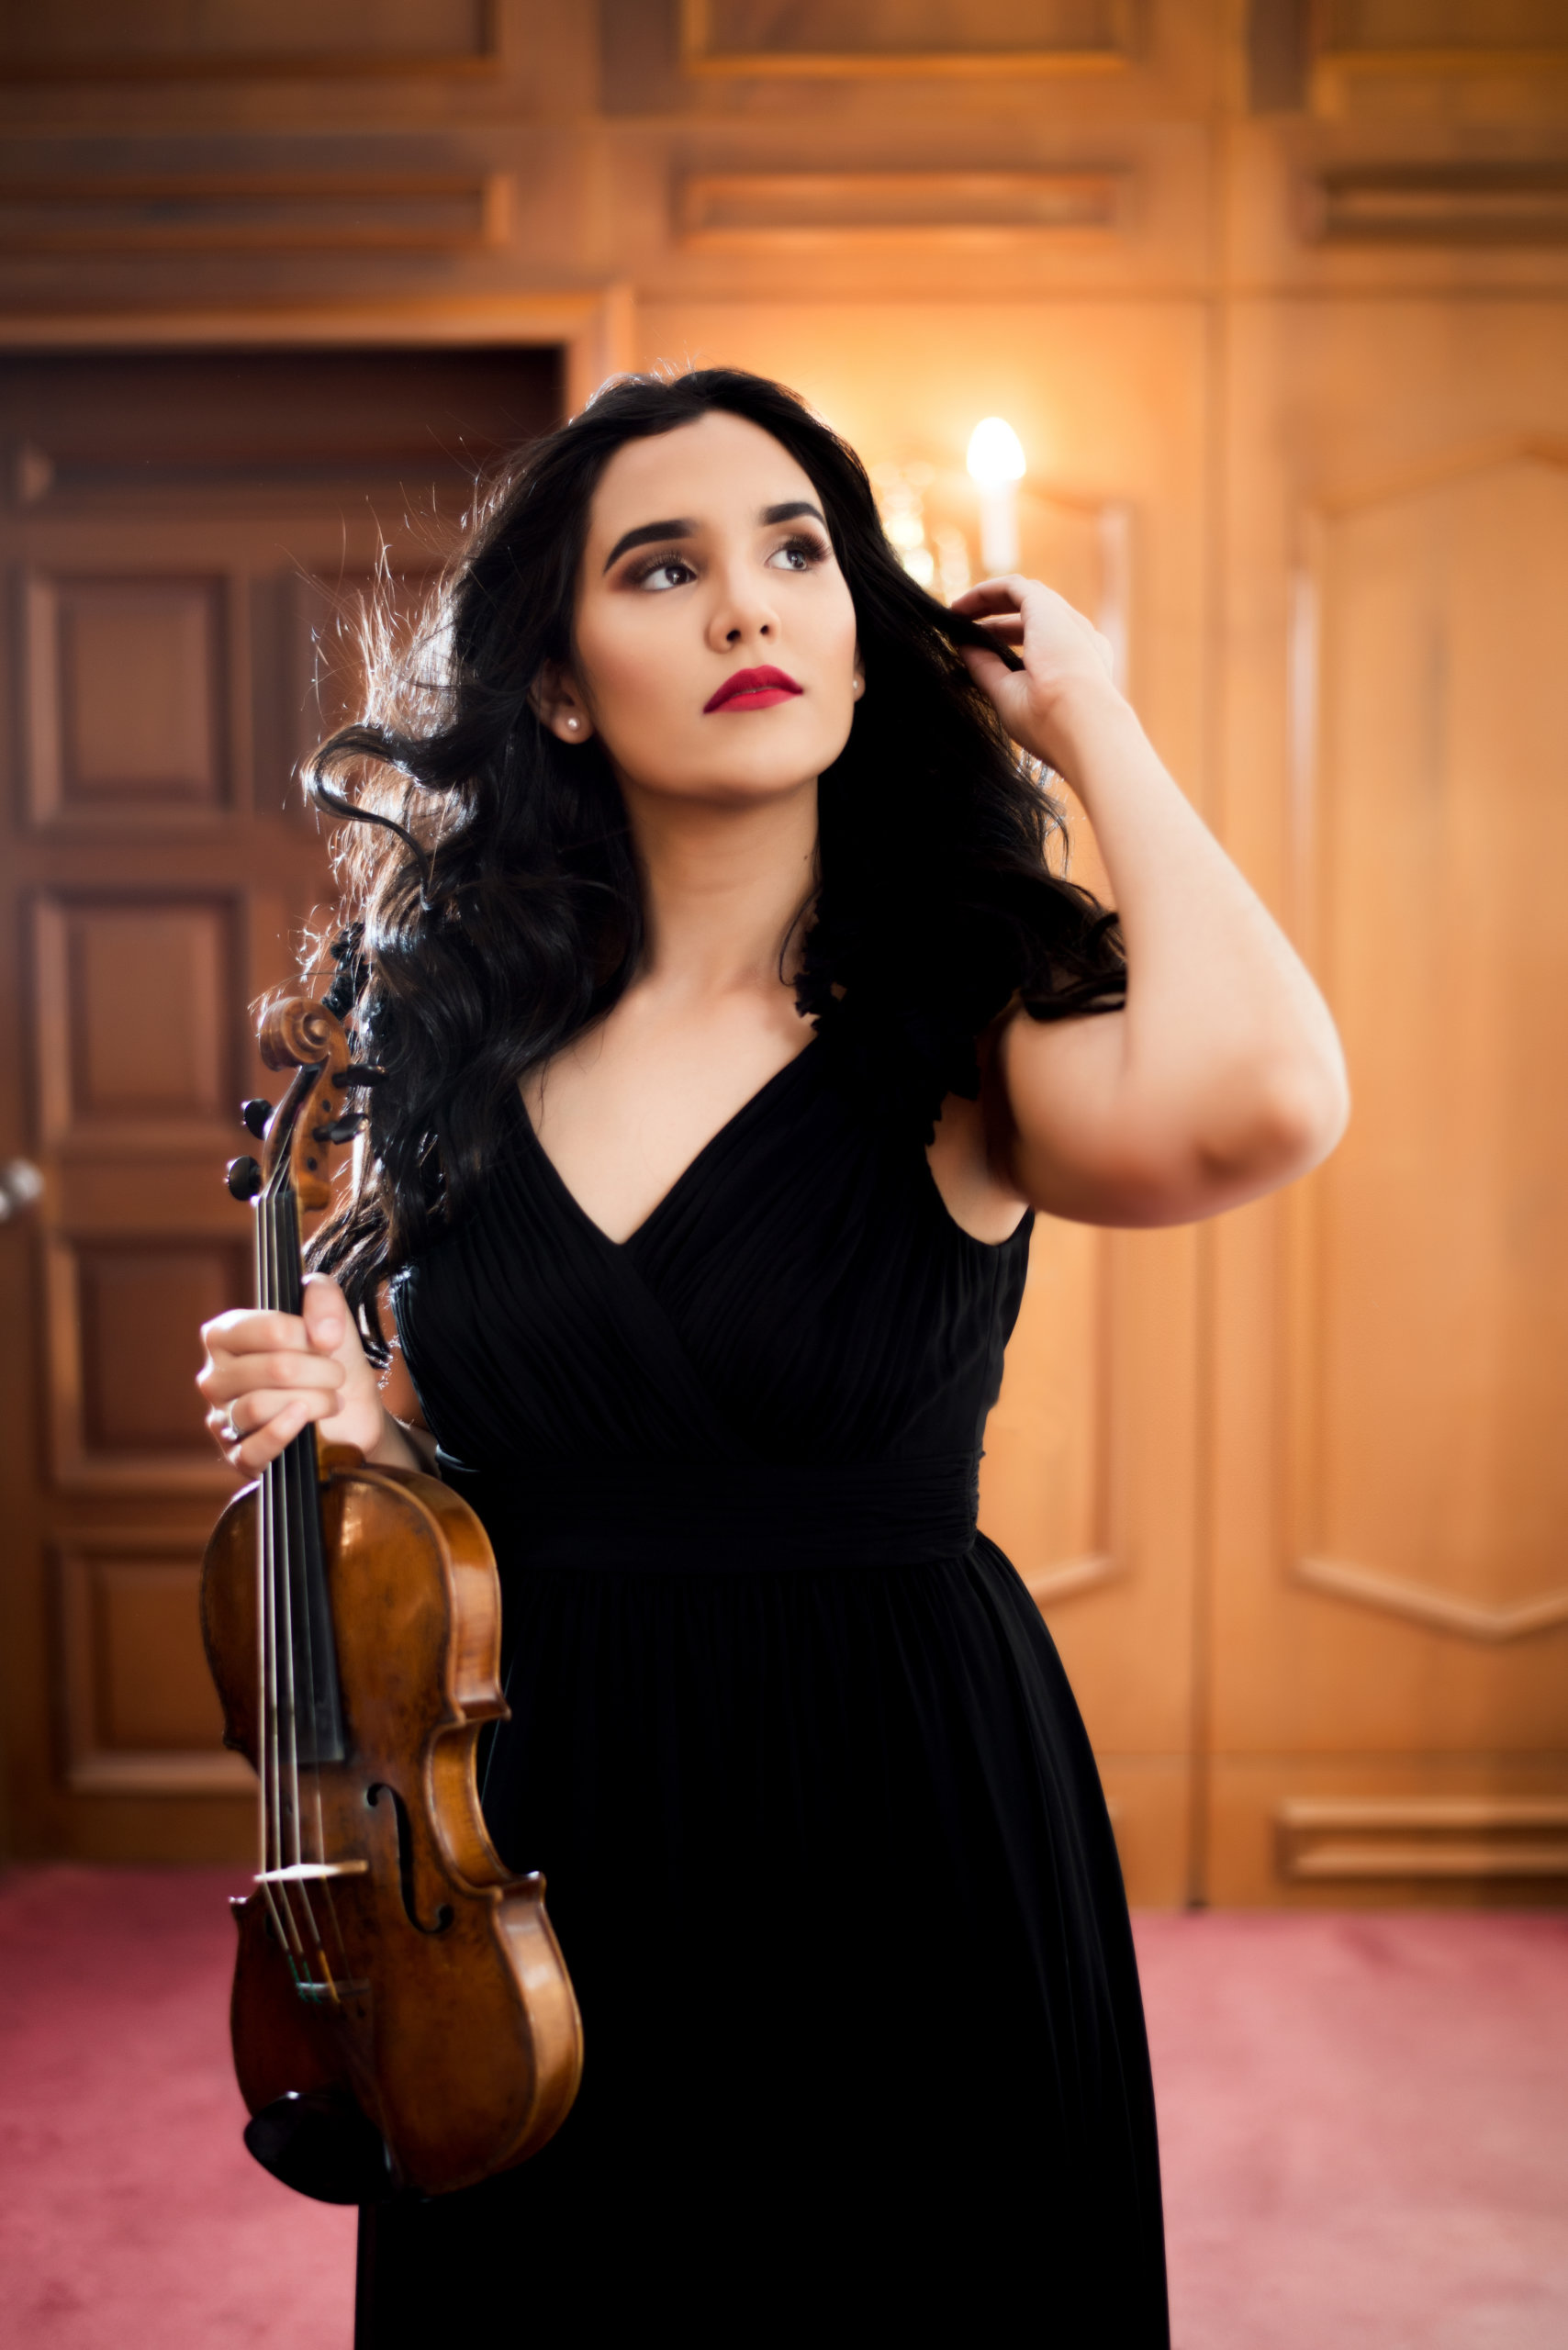 Violinista Aisha Syed